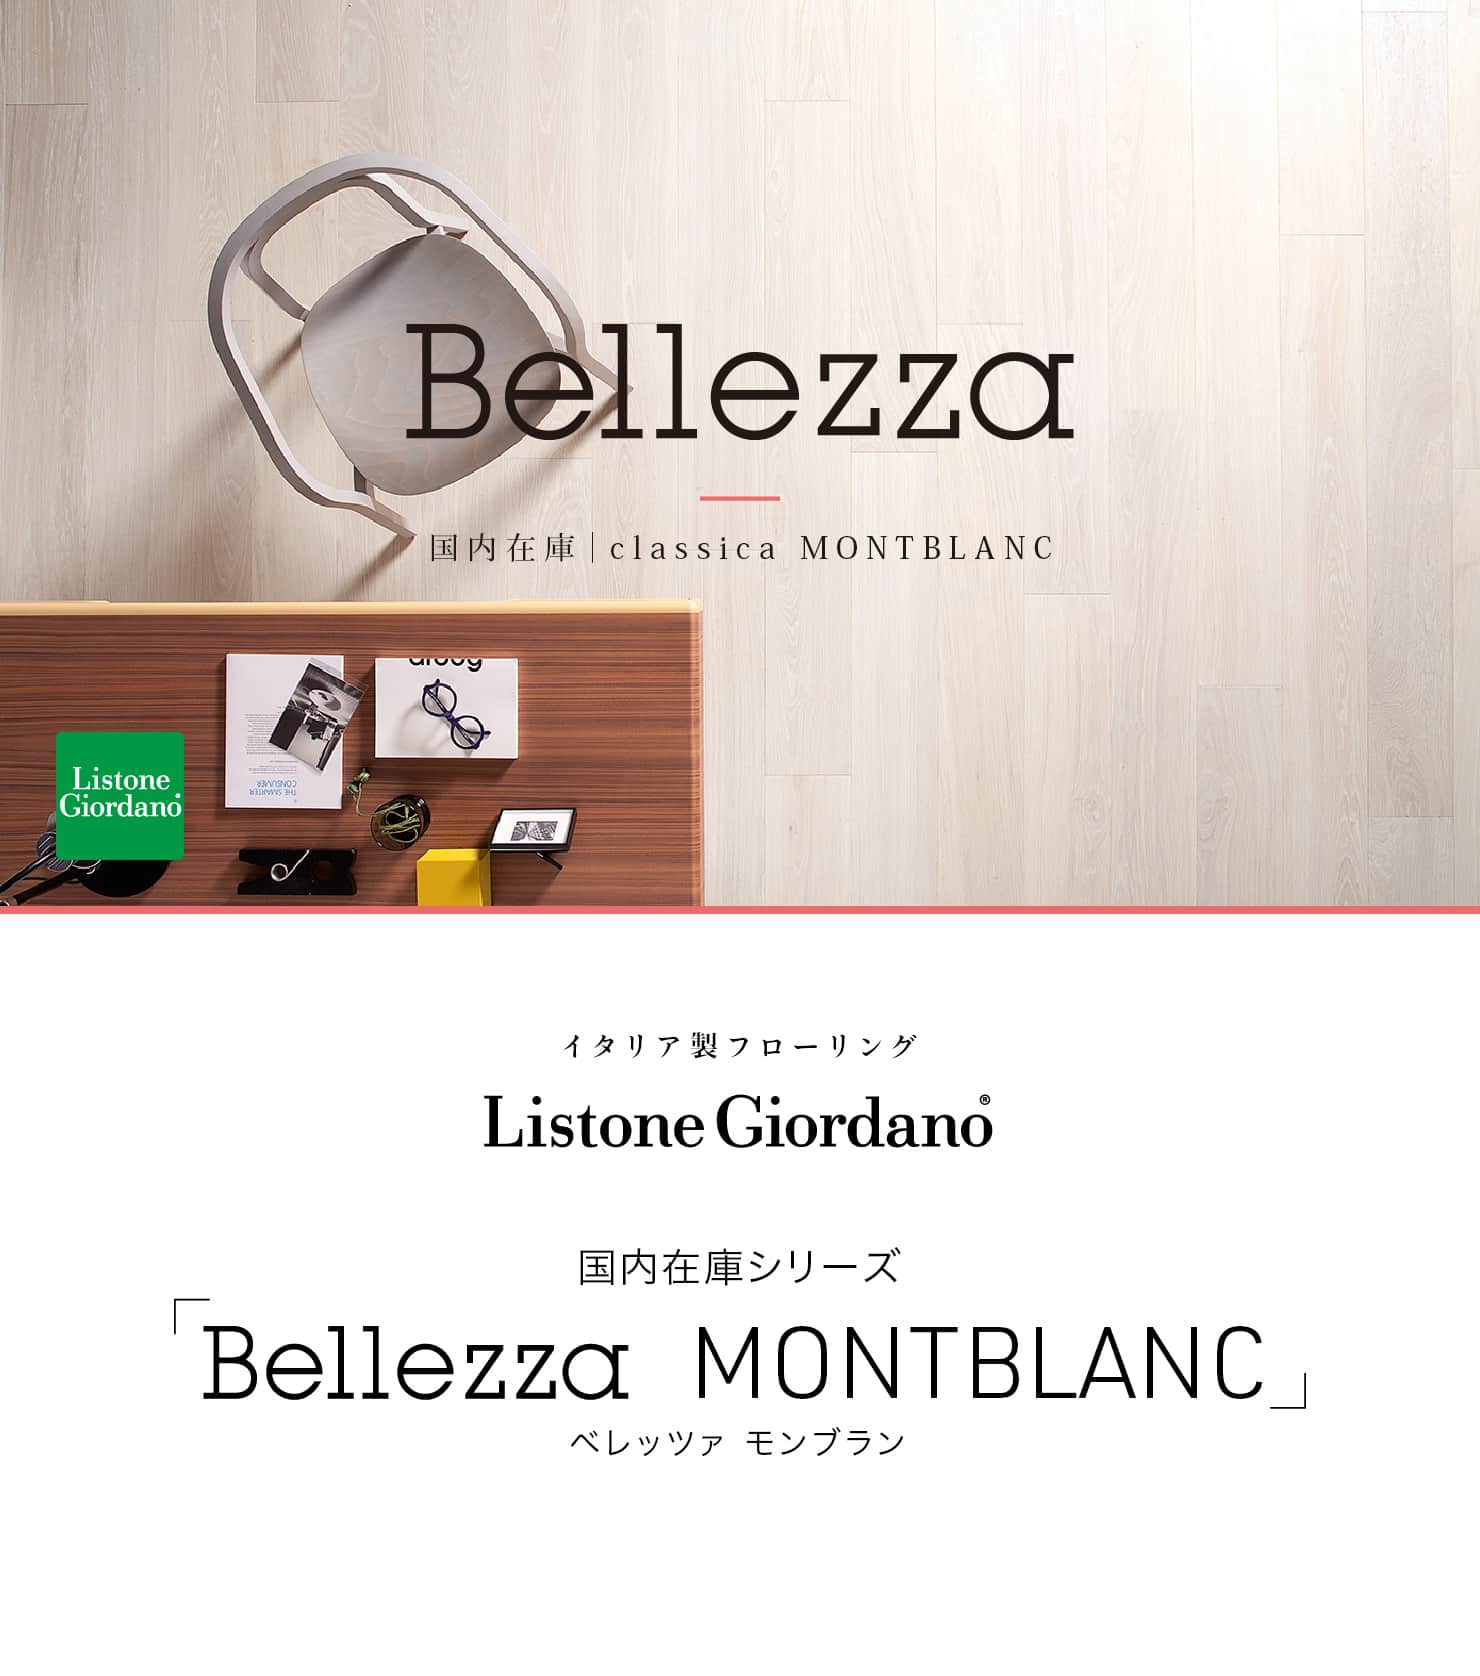 Bellezza ݌ classica MONTBLANC C^At[O Listone Giordano© ݌ɃV[Y uBellezza MONTBLANC xbc@ uv